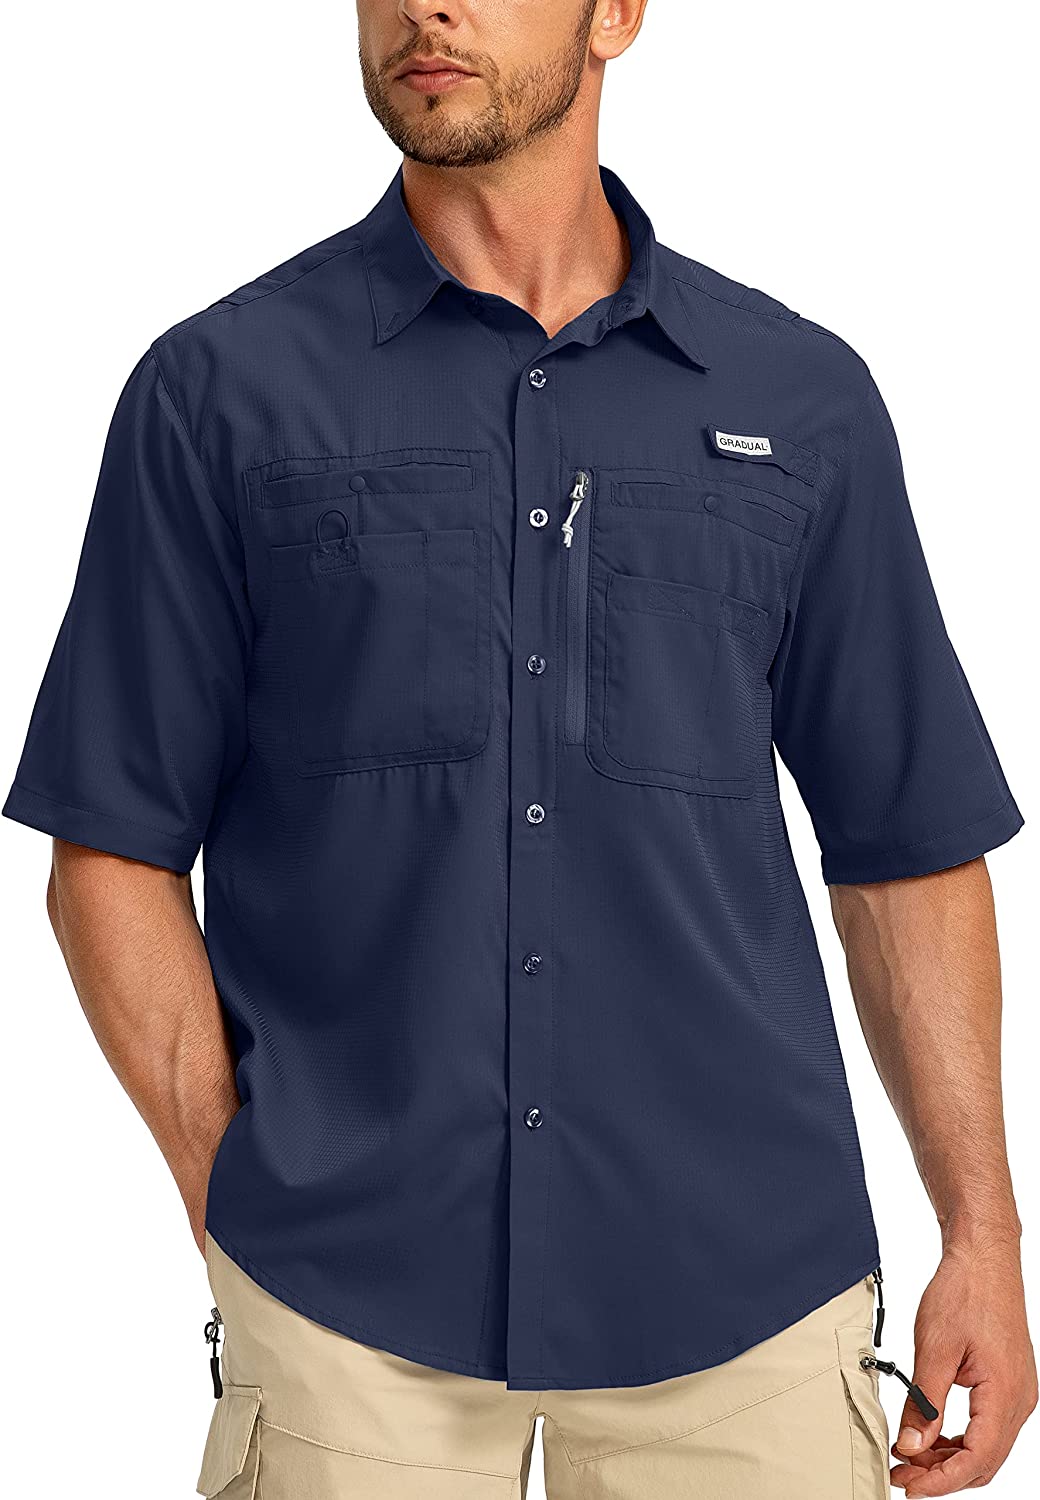 Men's Fishing Shirts with Zipper Pockets UPF 50+ Lightweight Cool Short  Sleeve B